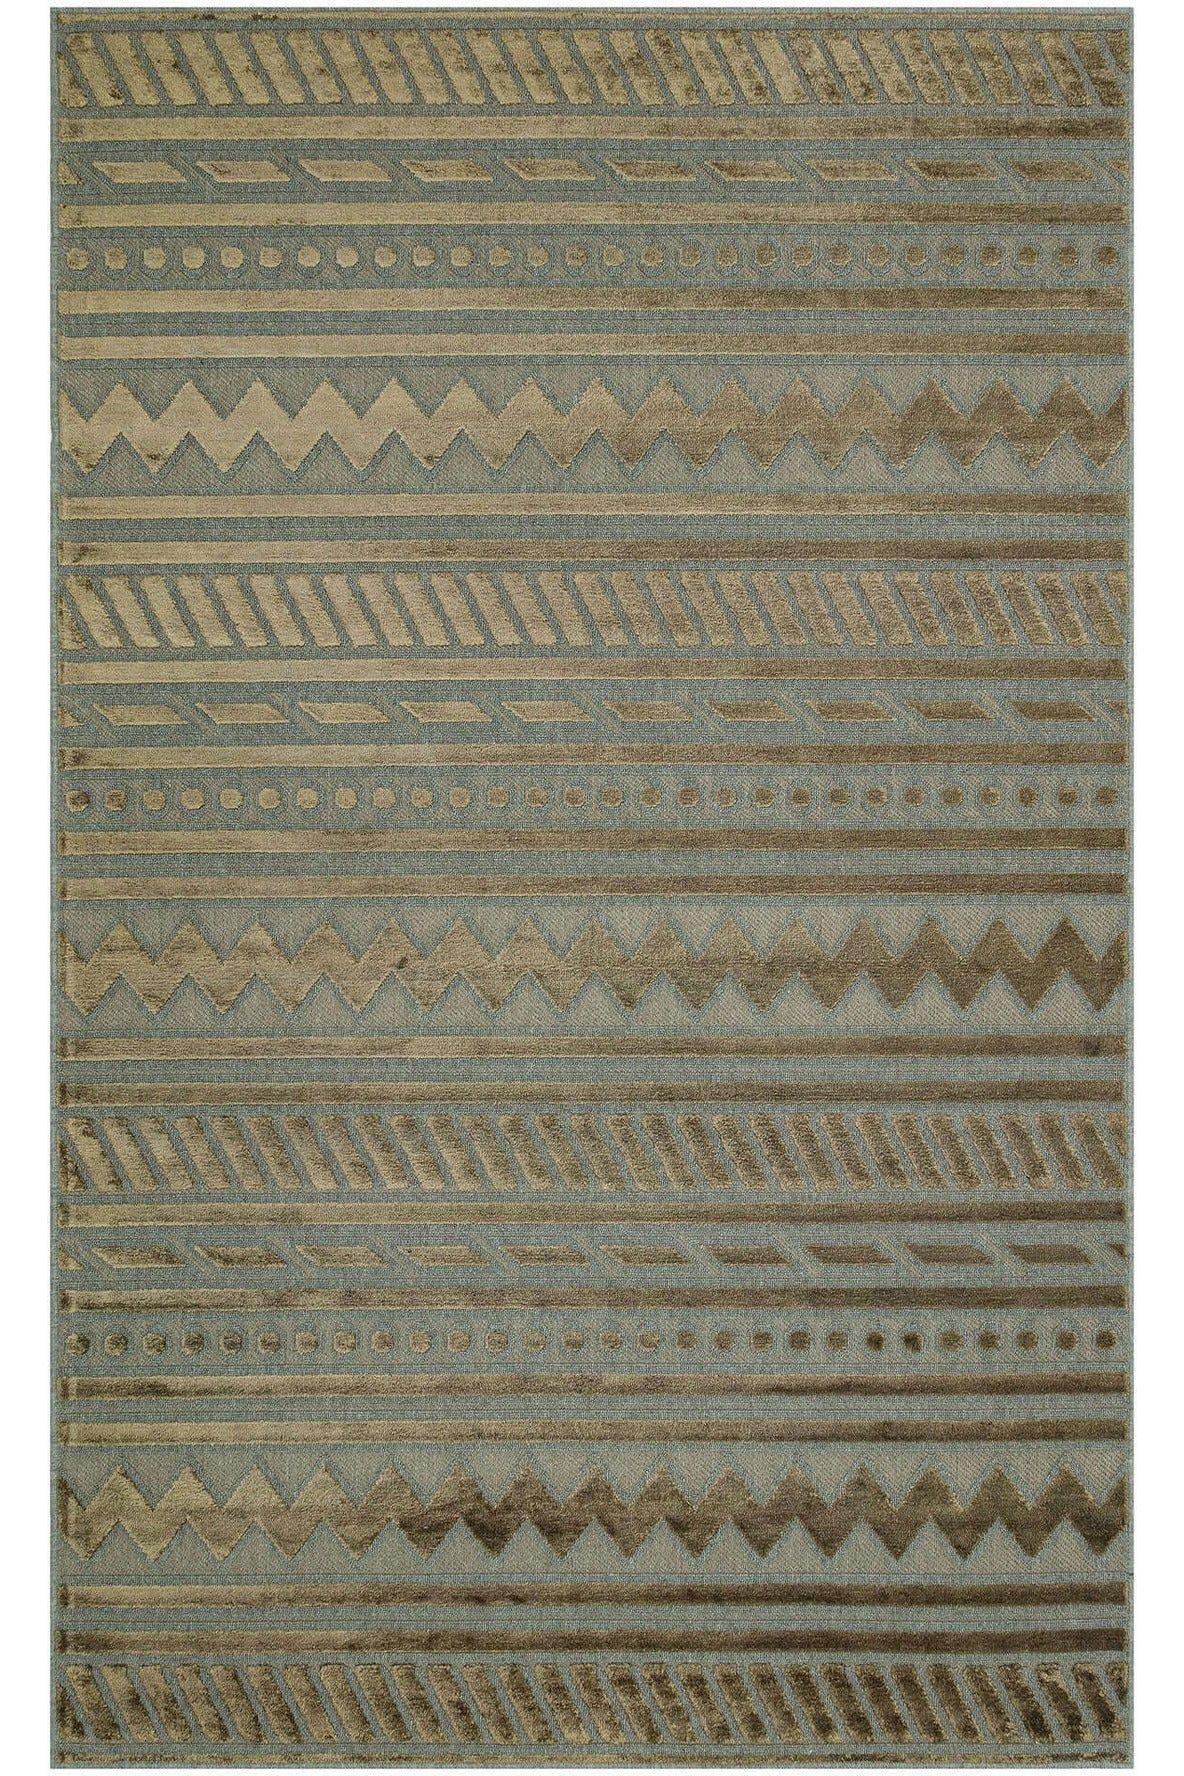 #Turkish_Carpets_Rugs# #Modern_Carpets# #Abrash_Carpets#Znt 06 Green Dyed